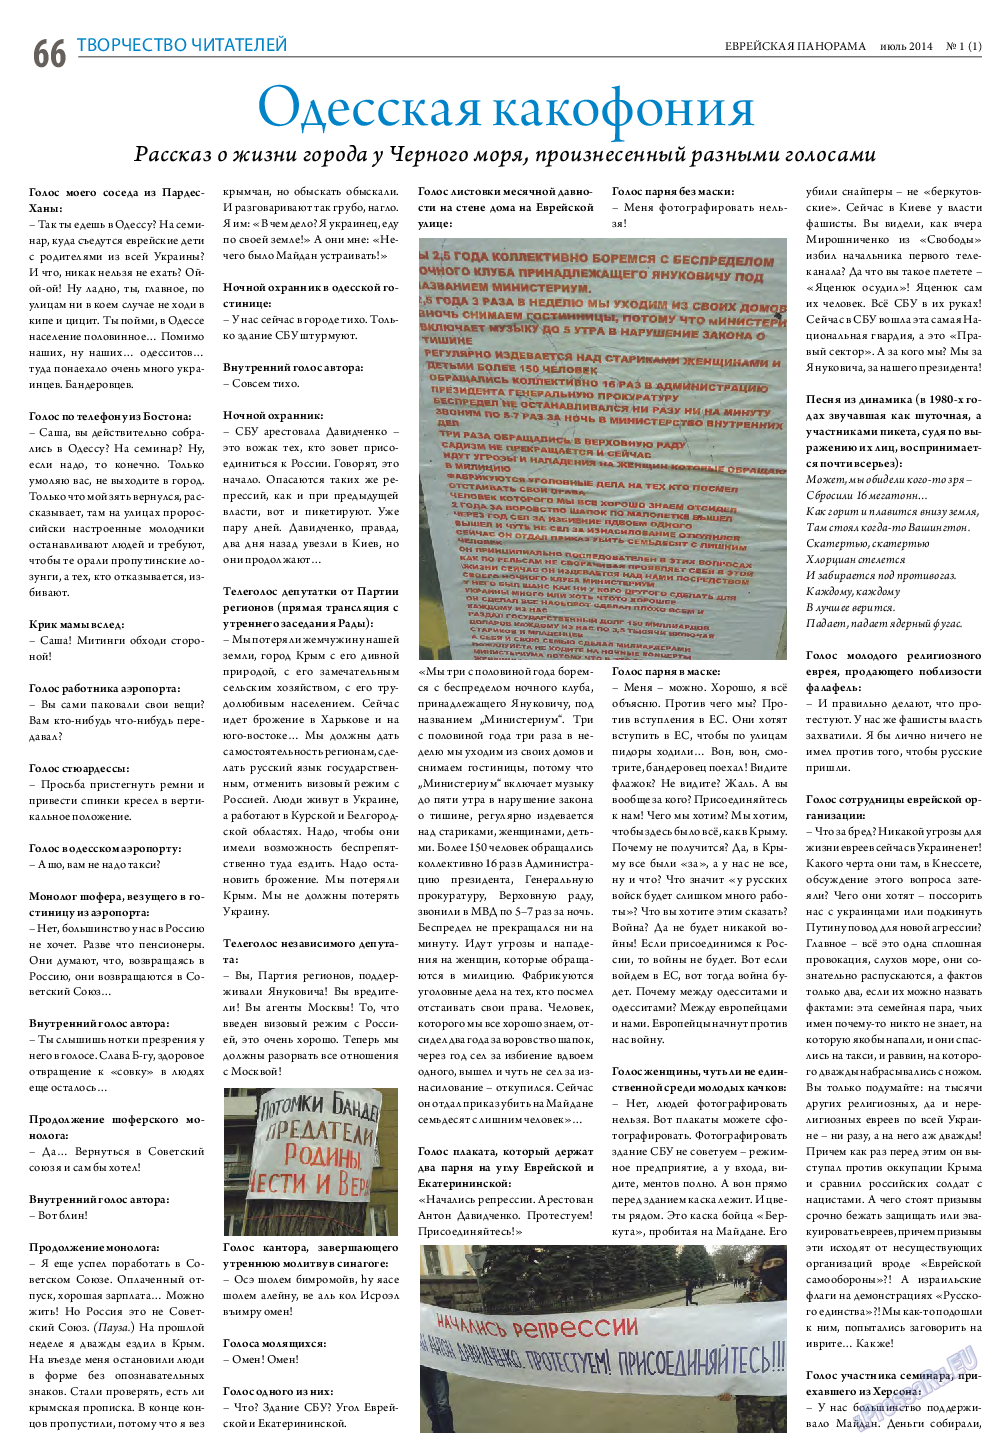 Еврейская панорама, газета. 2014 №1 стр.66